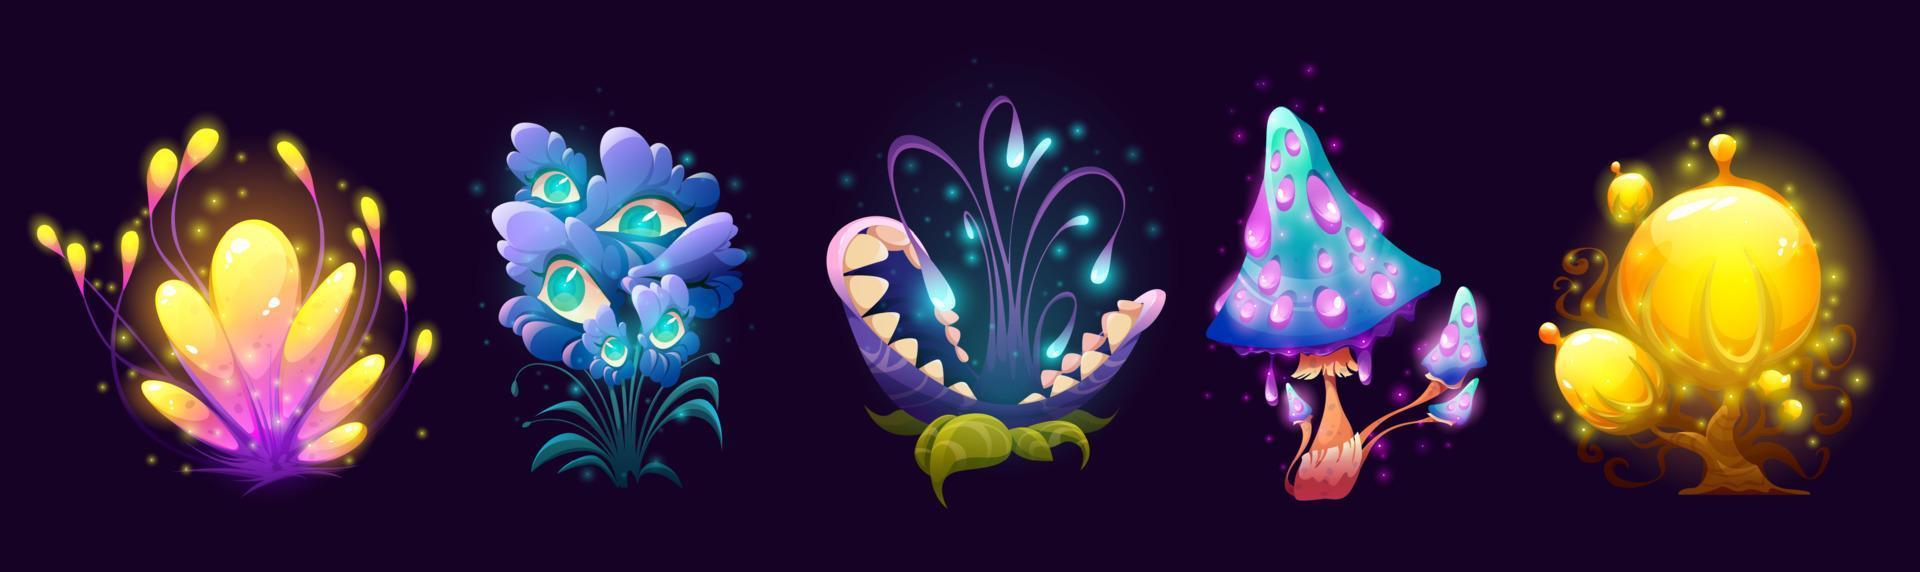 Fantasy mushrooms, flowers and trees, alien flora vector